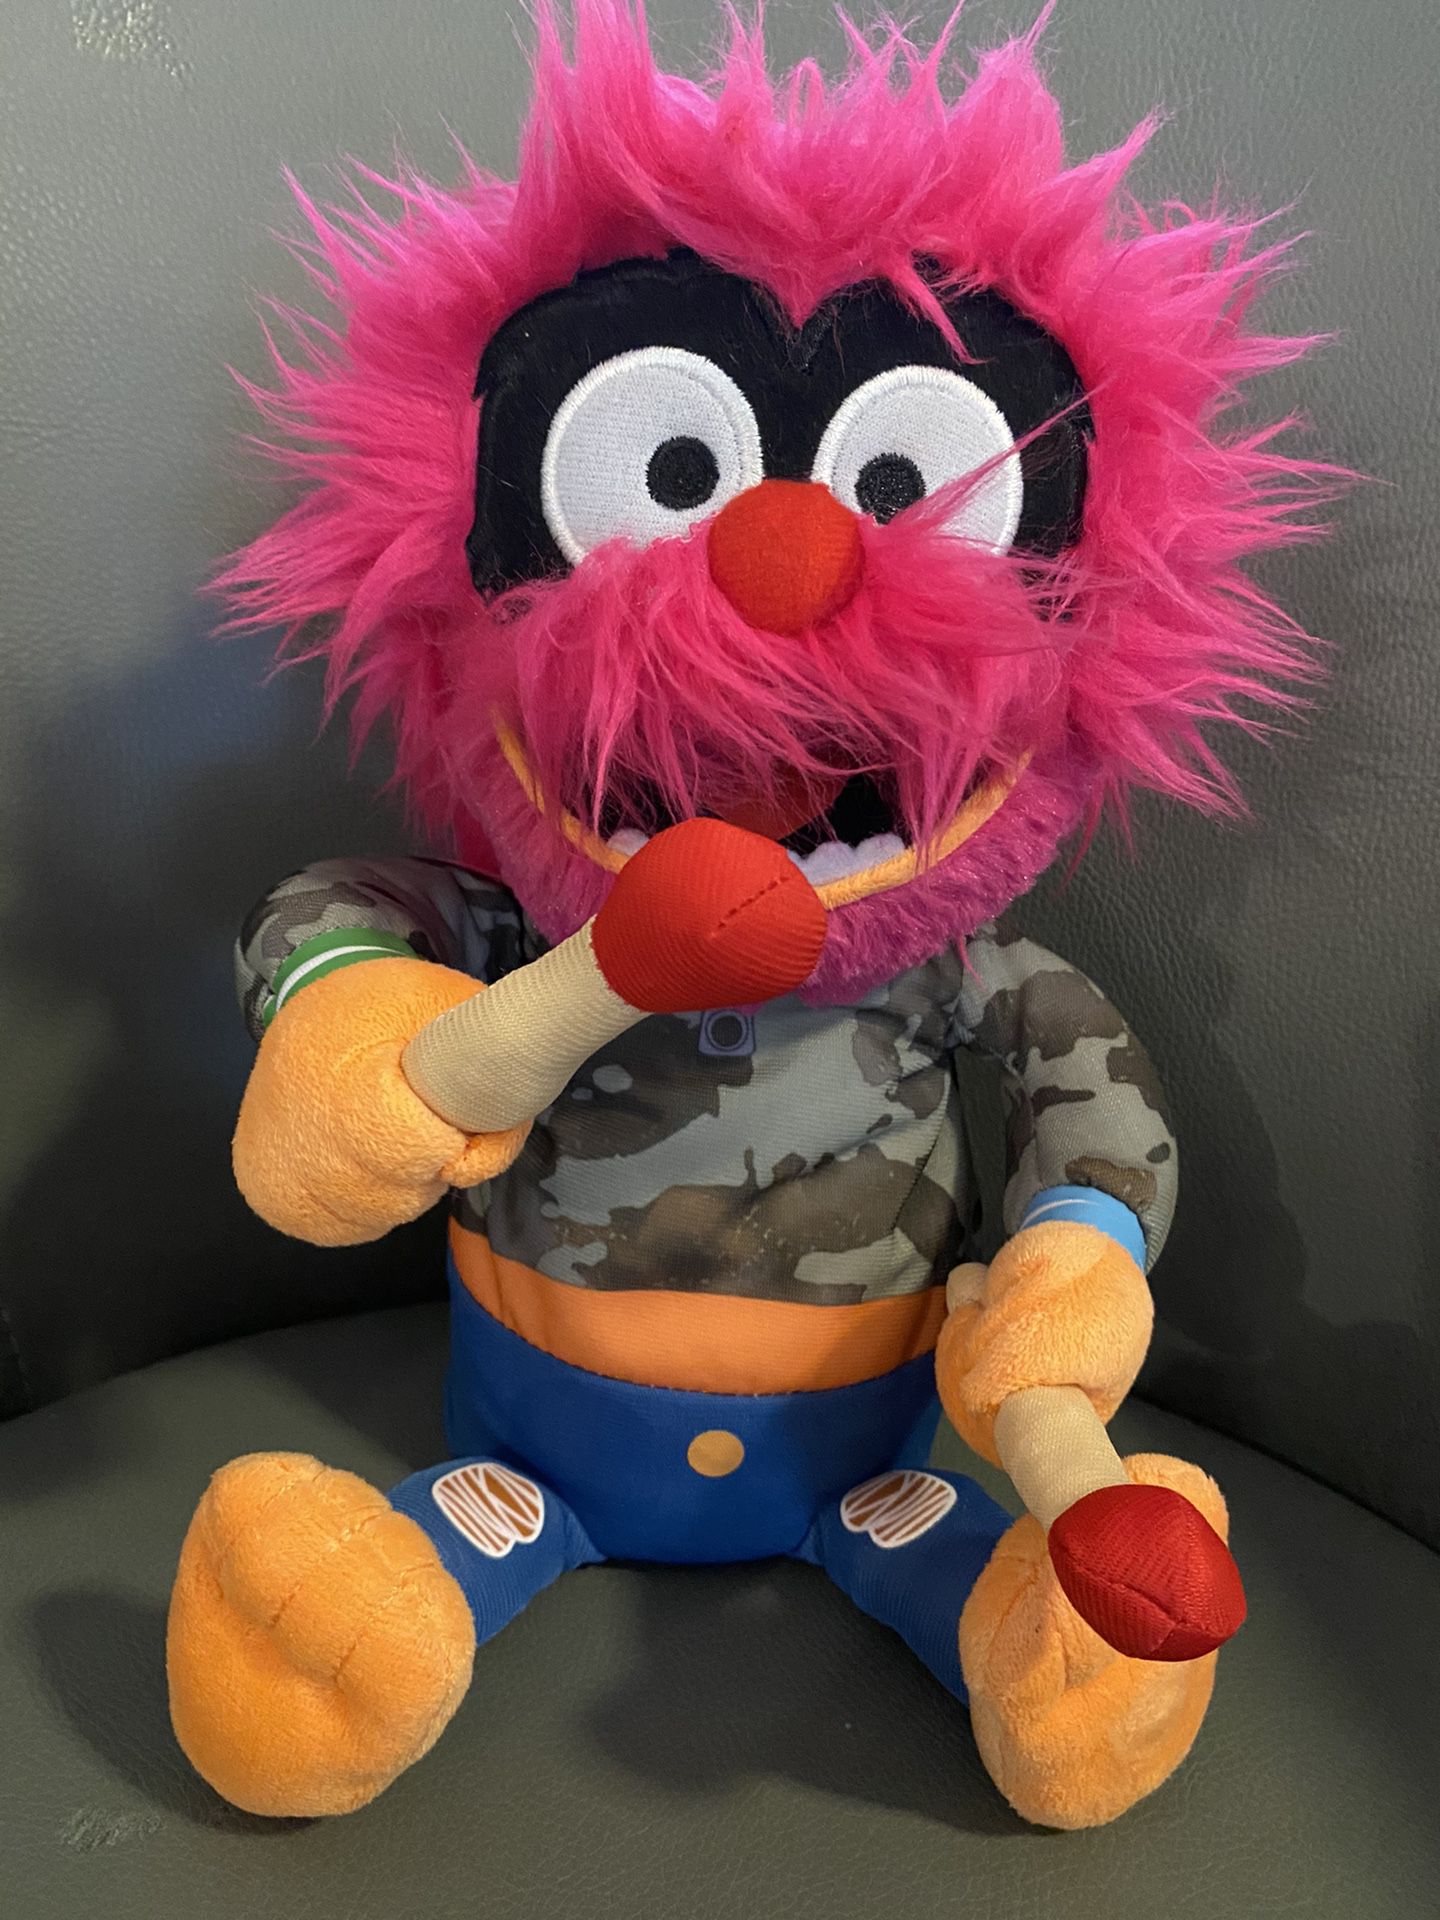 Disney Jr Muppet Babies Rockin "Animal" Plush Toy Stuffed Doll